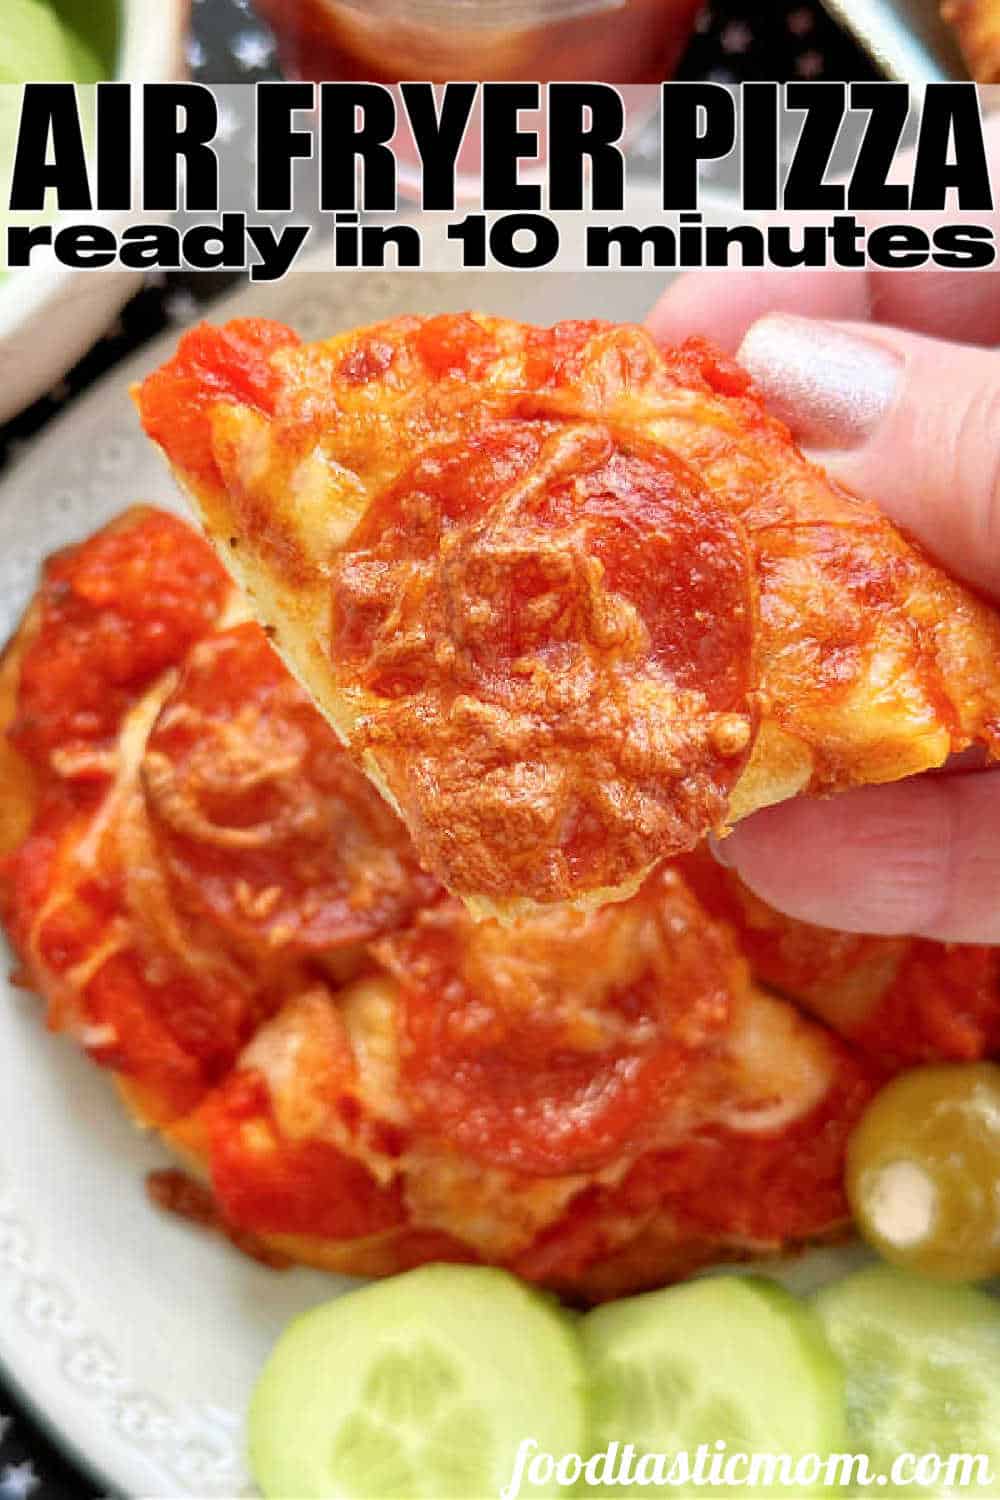 Air Fryer Pizza | Foodtastic Mom #airfryerrecipes #airfryerpizza #pizzarecipes via @foodtasticmom